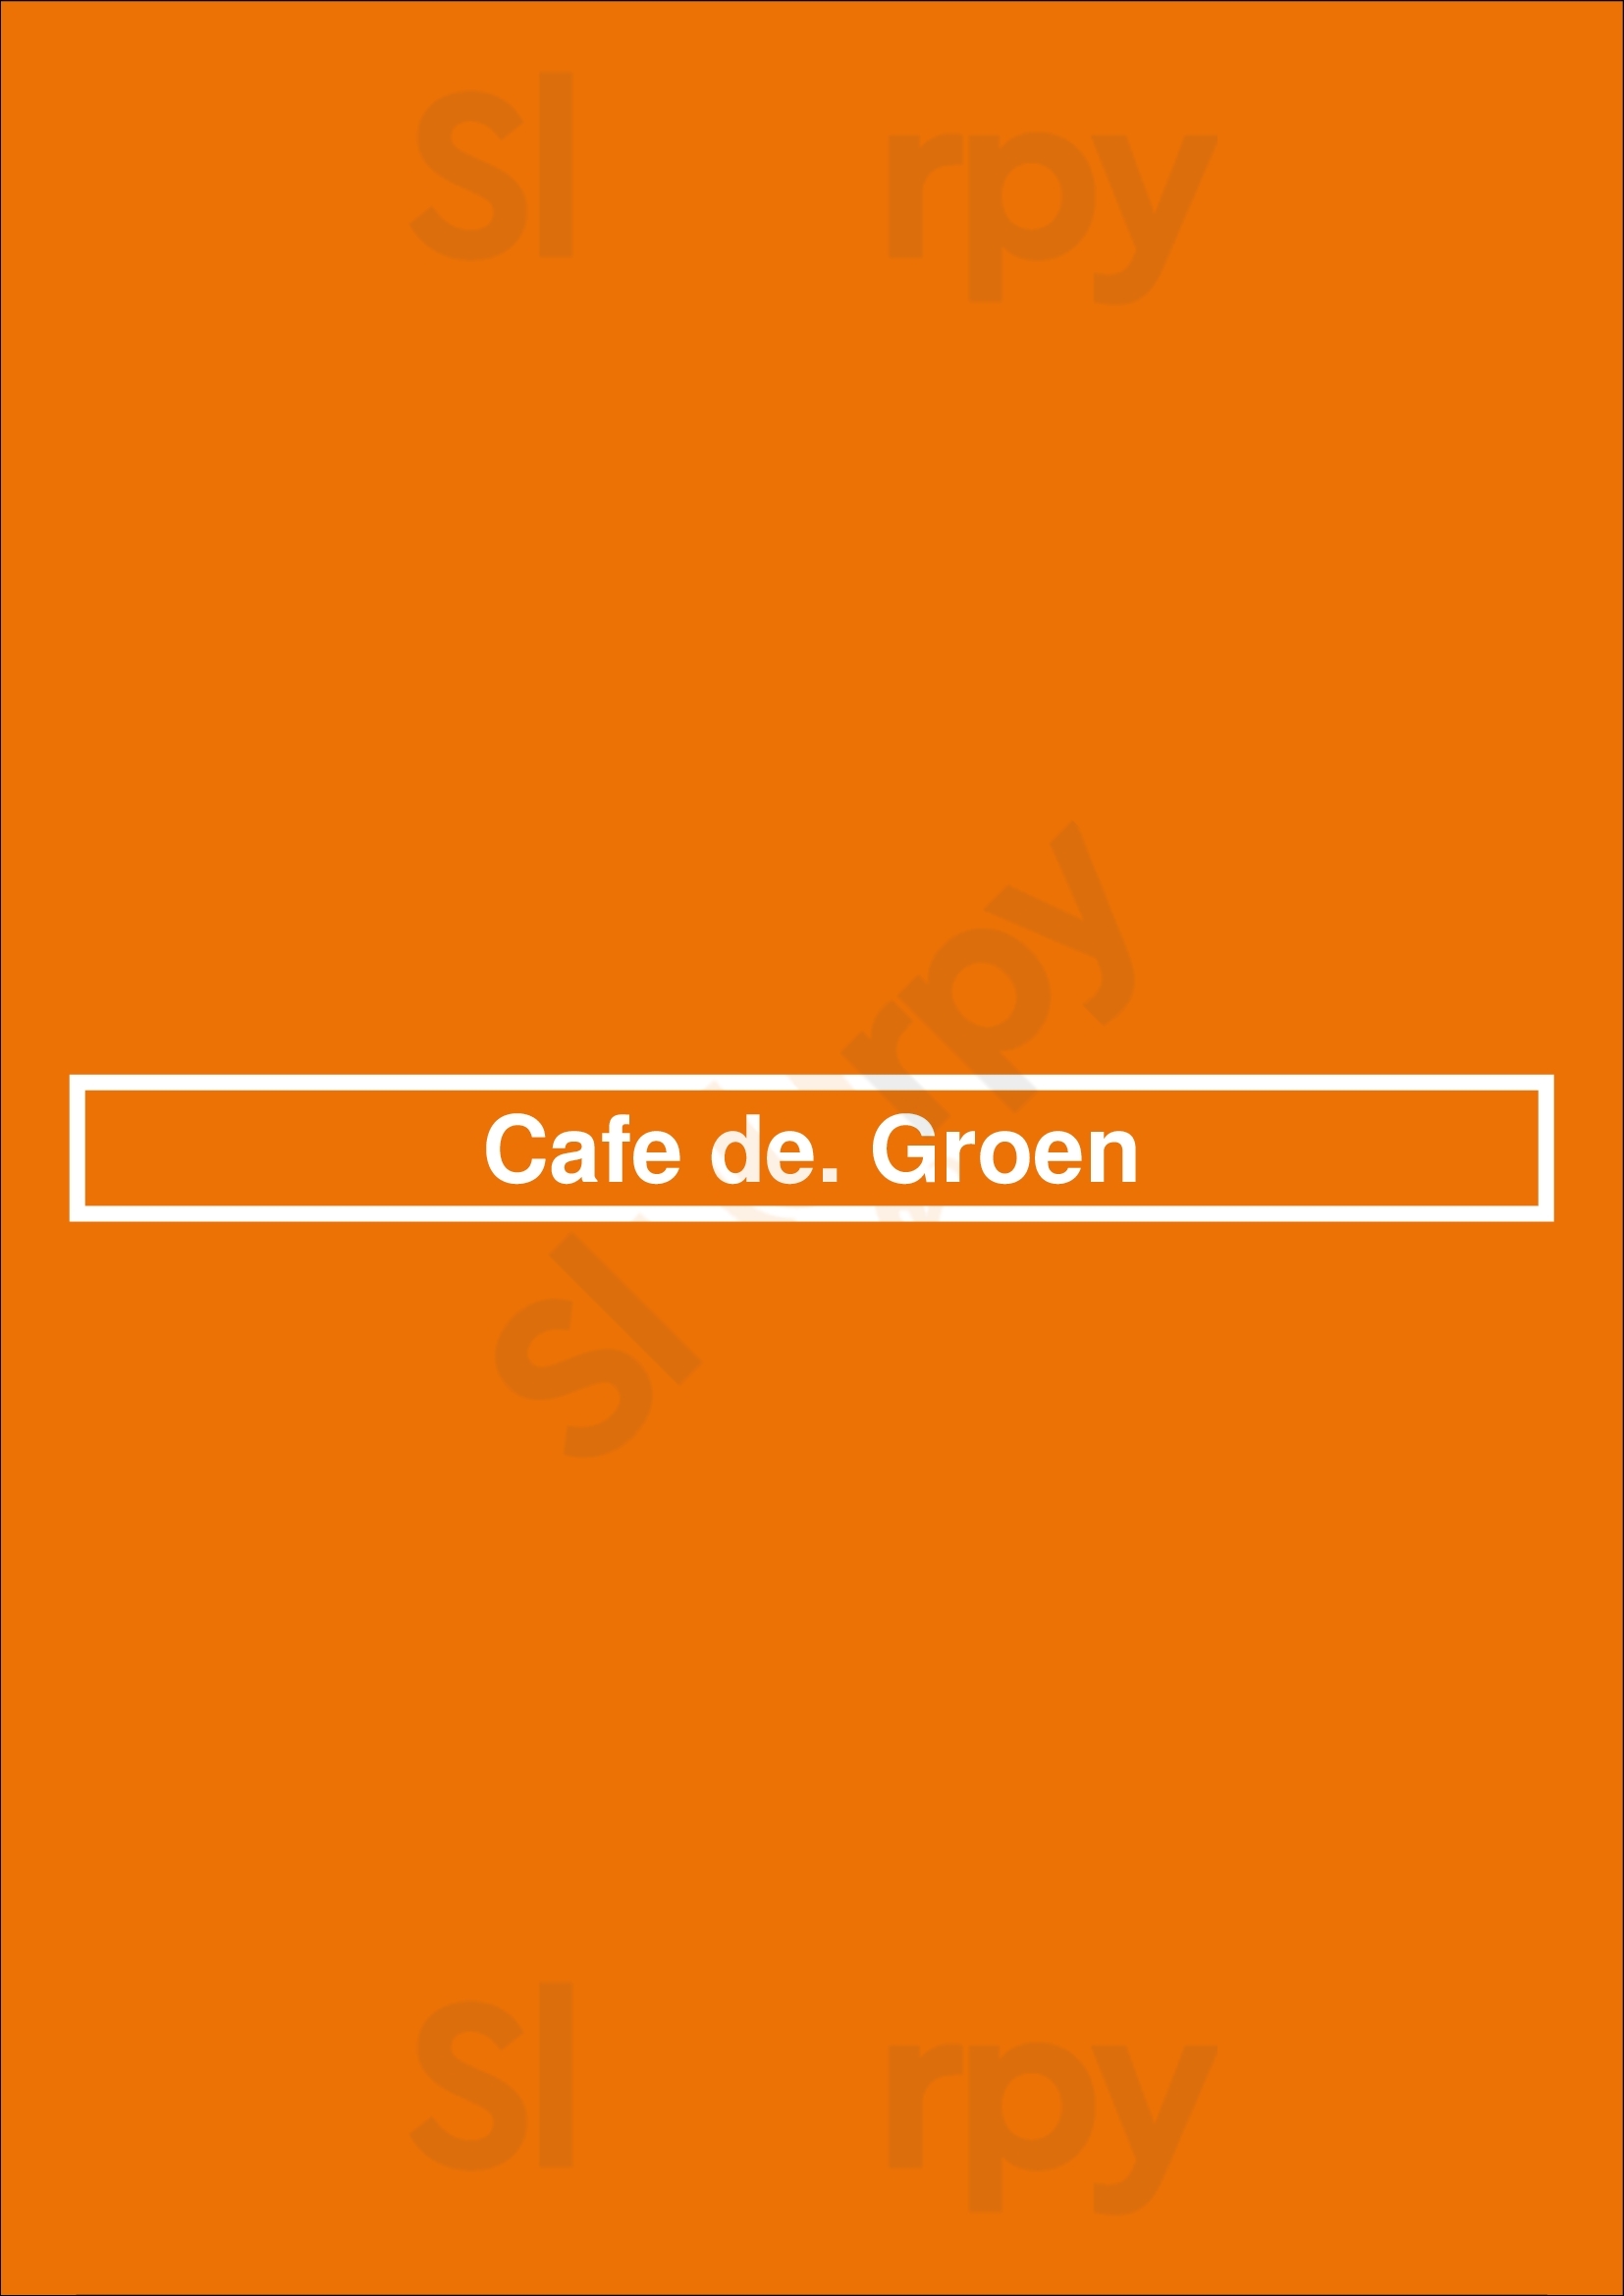 Cafe De. Groen Arnhem Menu - 1